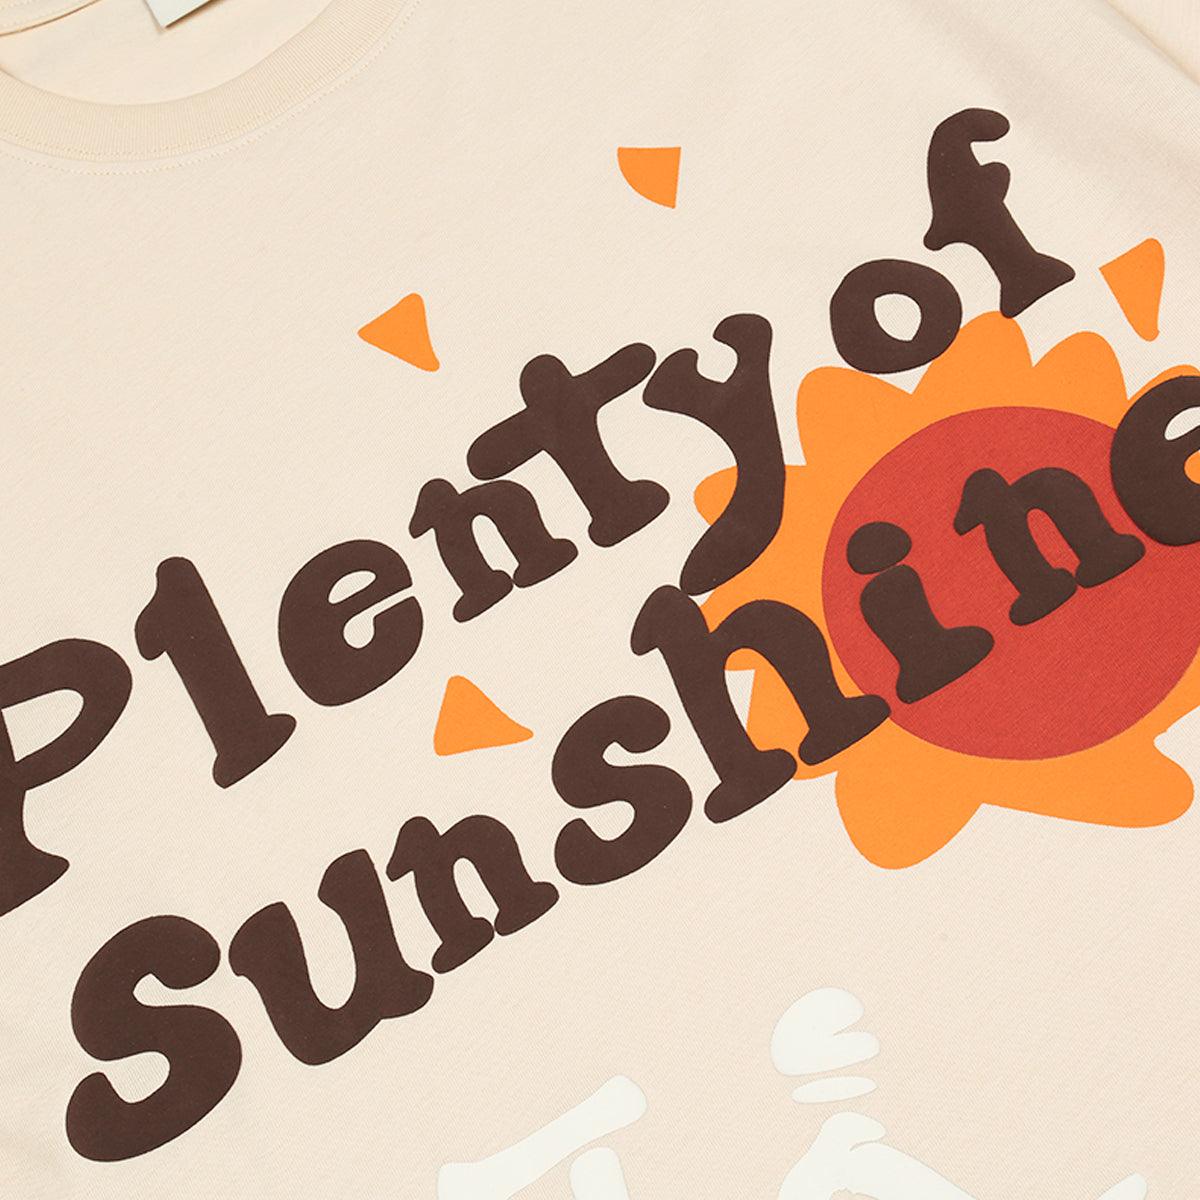 Plenty of Sunshine Skeleton T-Shirt